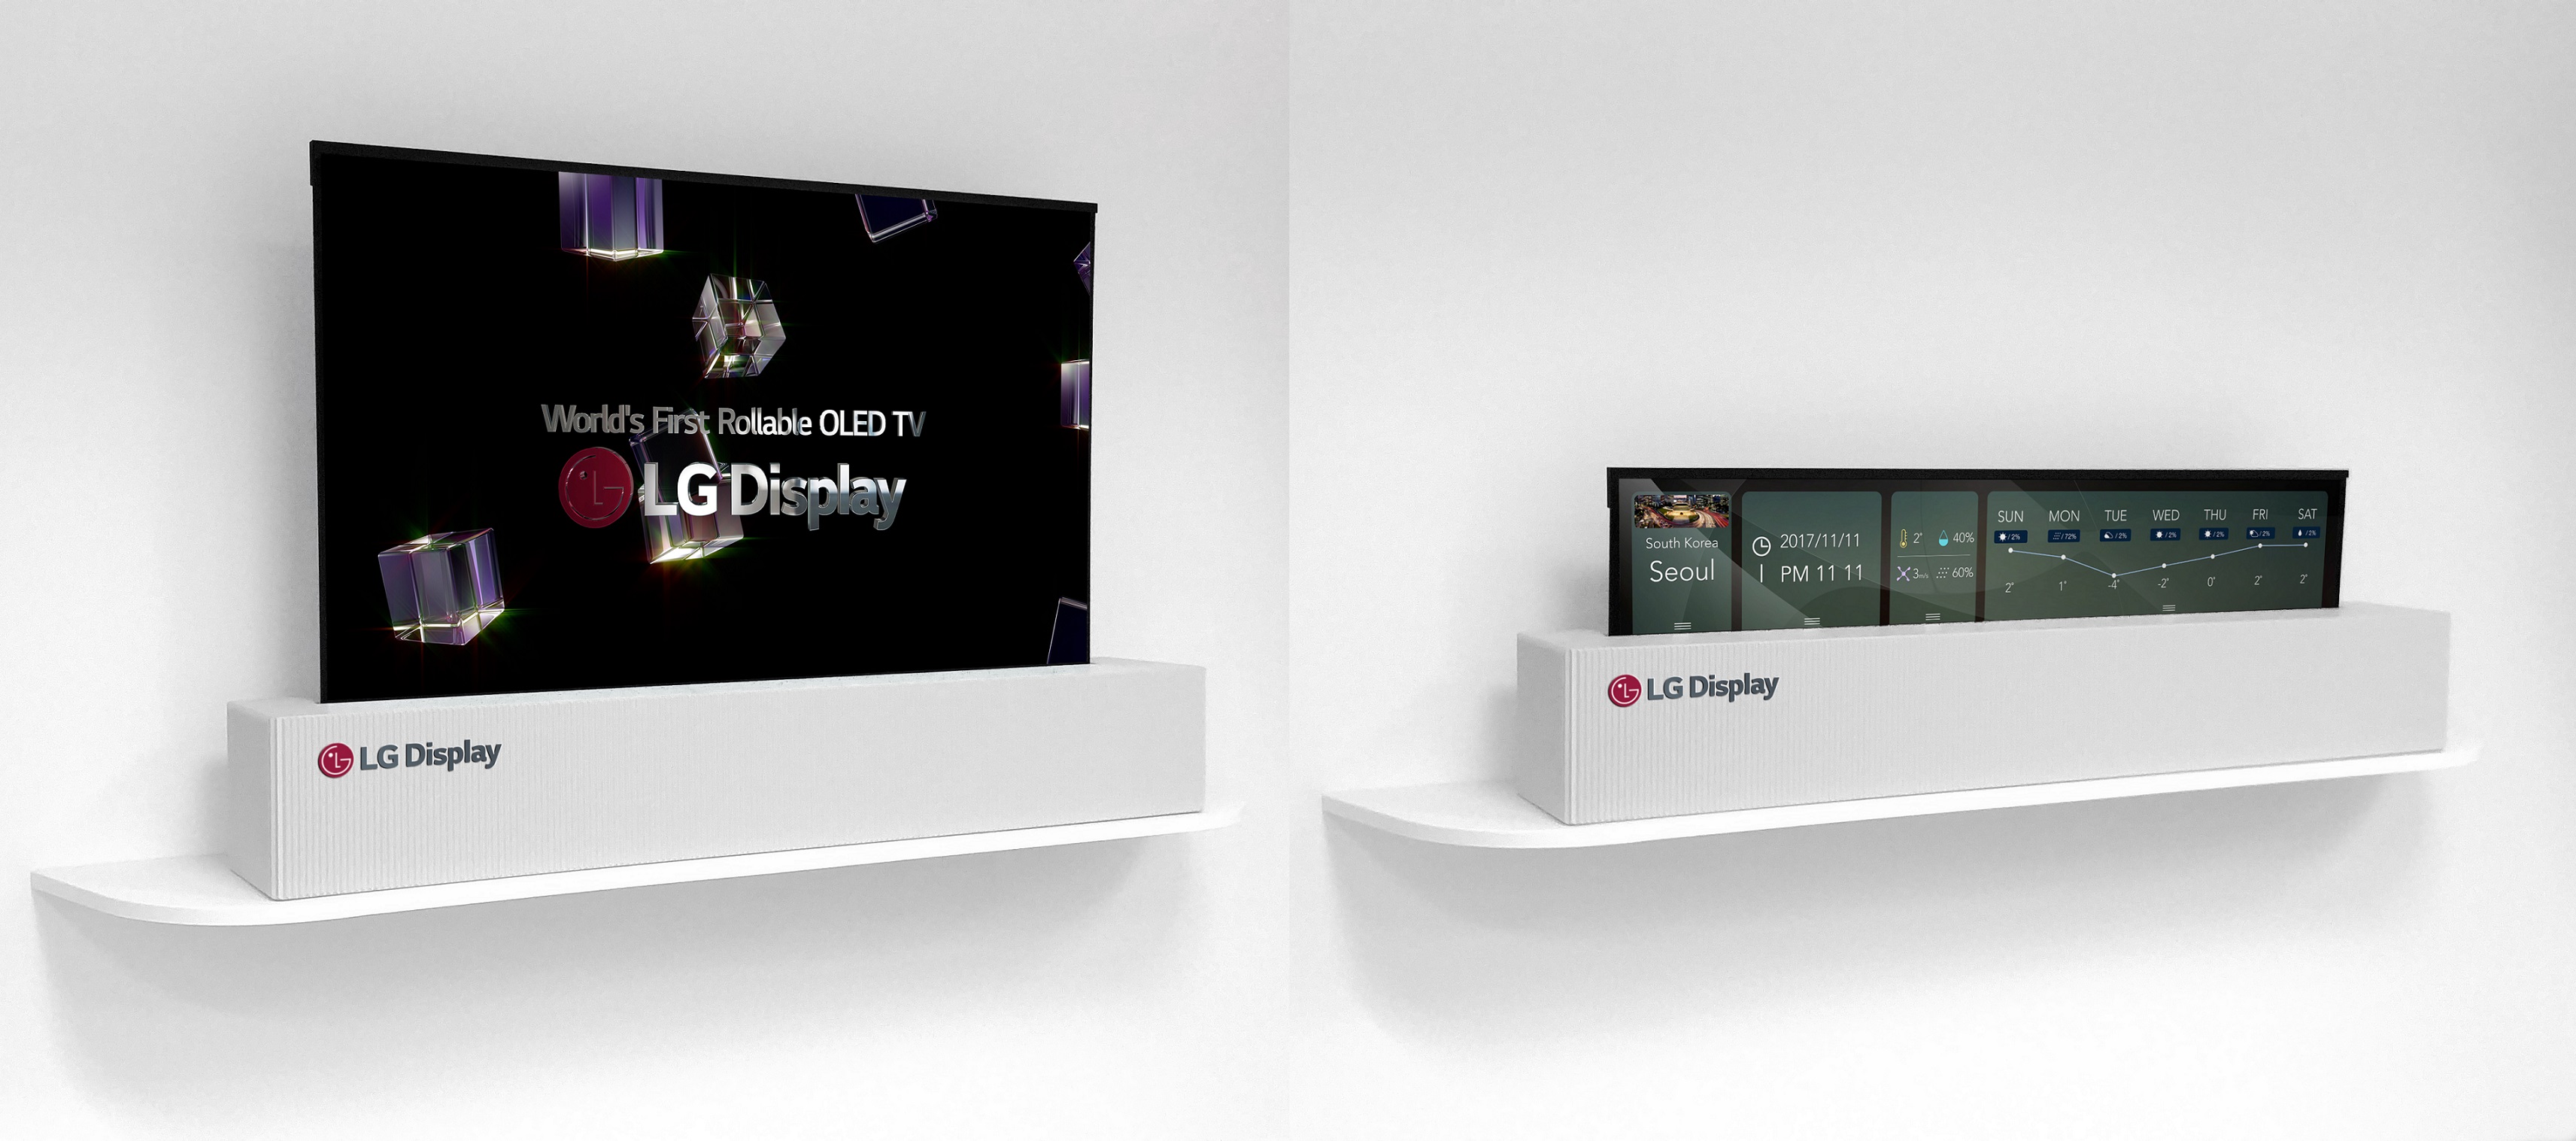 LG’s UHD rollable OLED display.